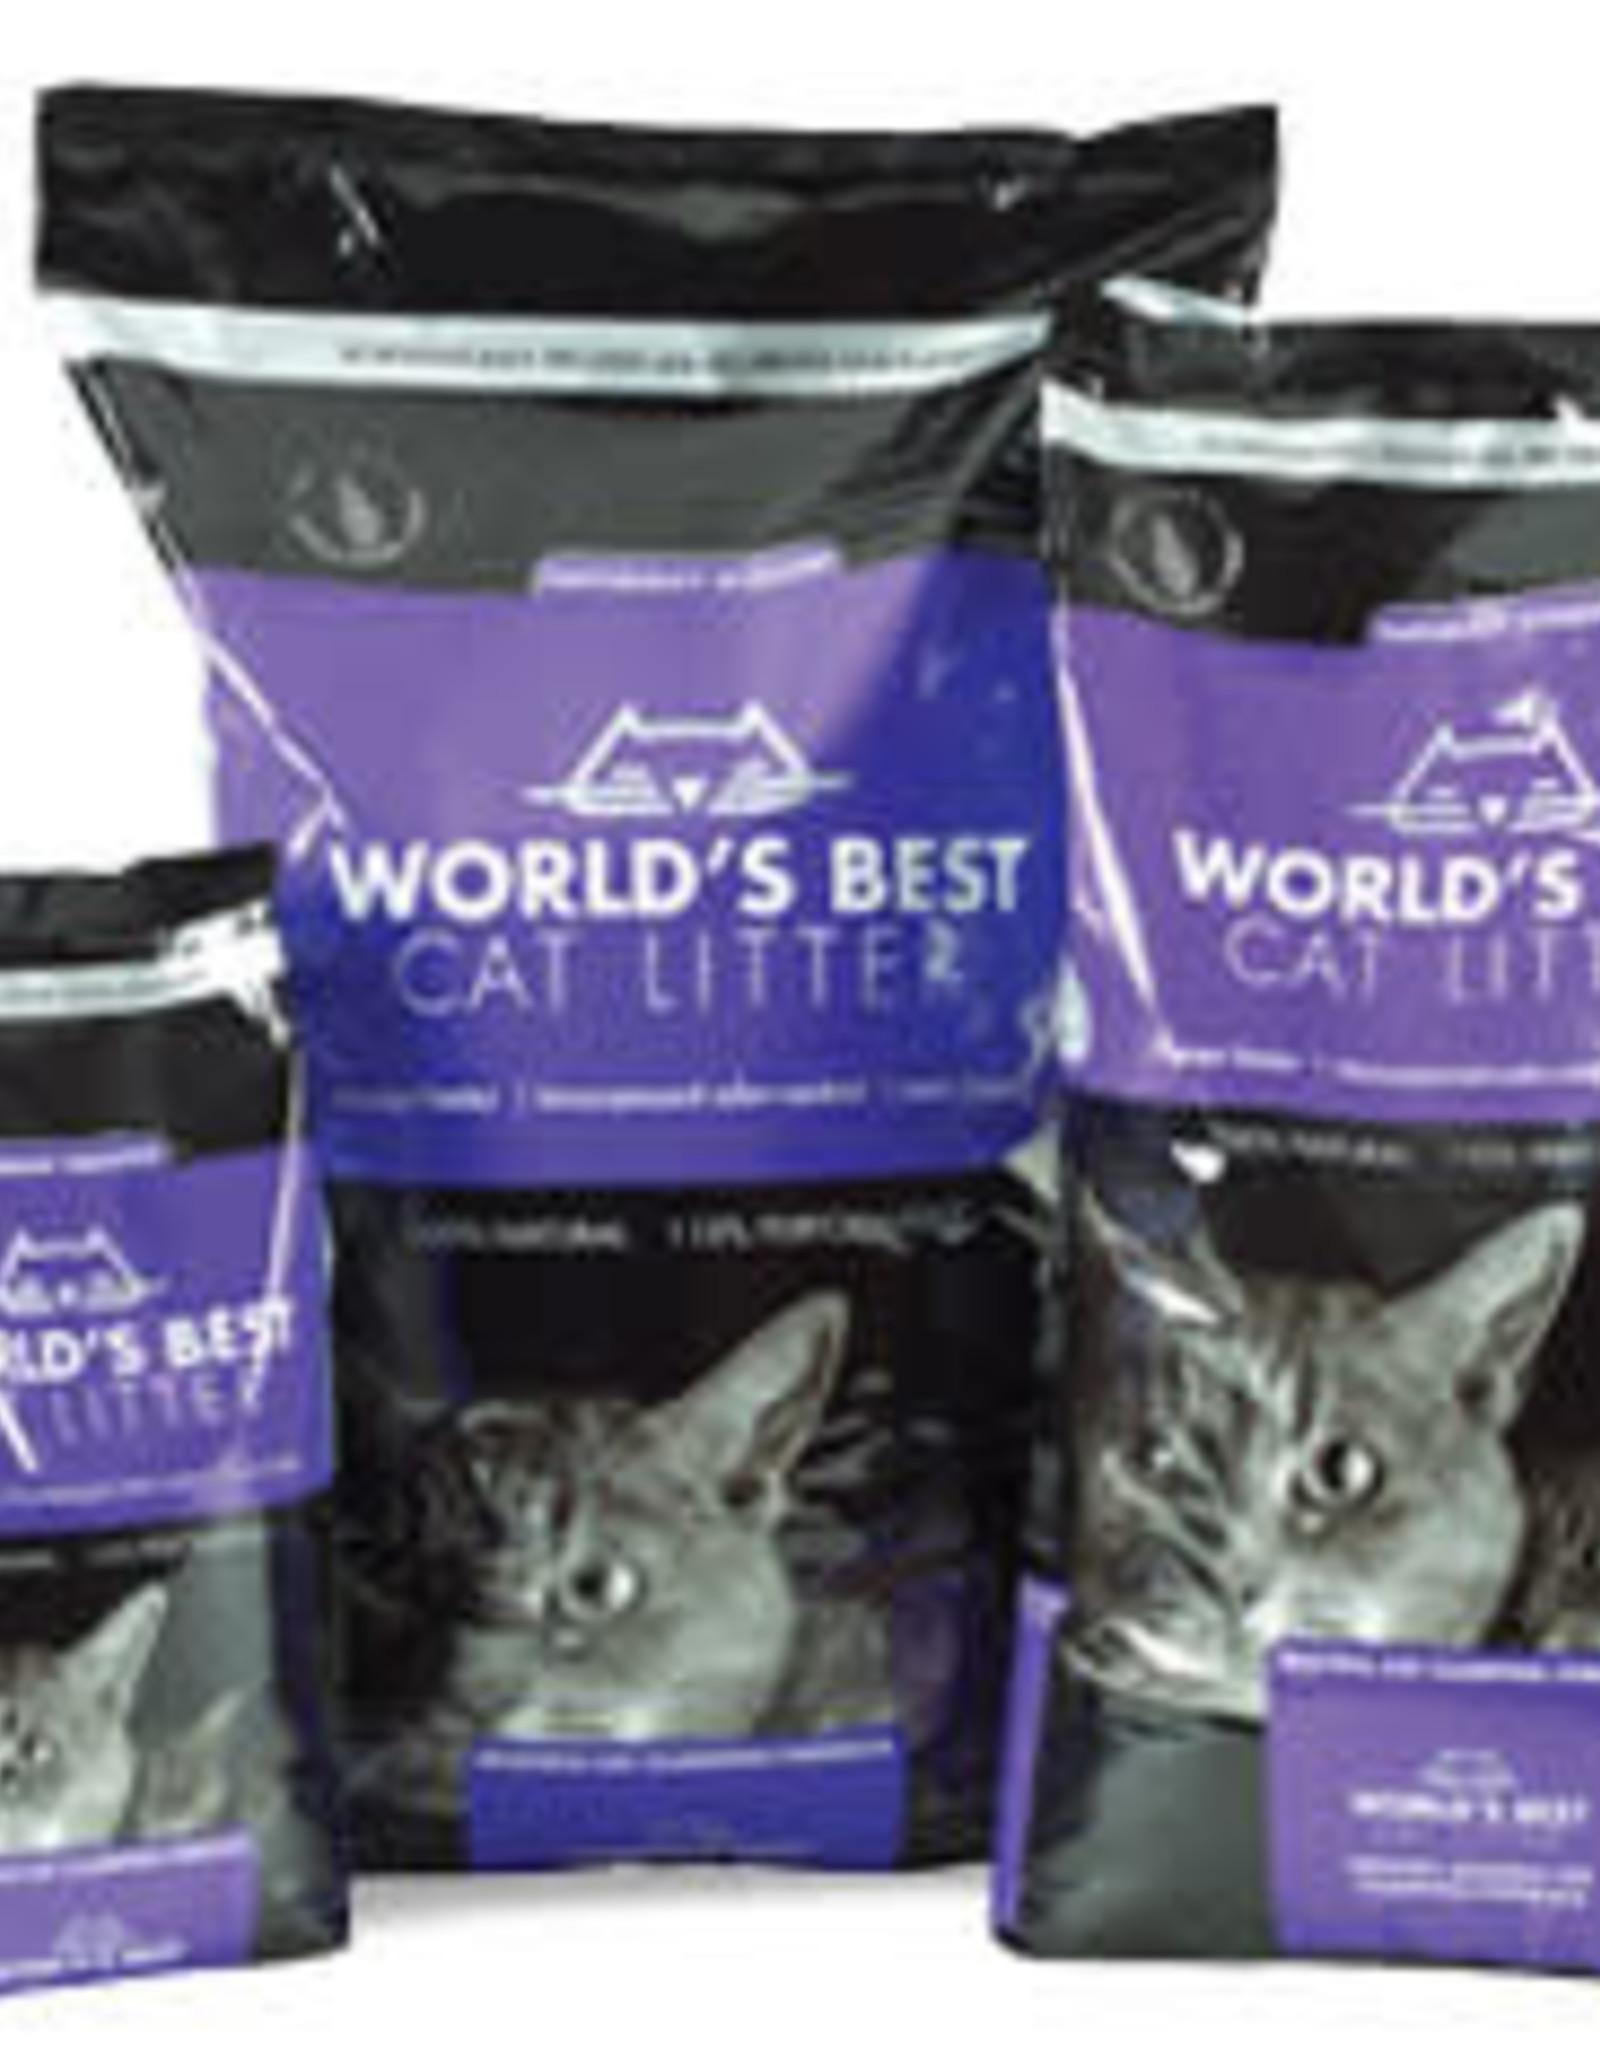 WORLD'S BEST WORLD'S BEST CAT LITTER MULTI-CAT LAVENDER SCENTED 15#